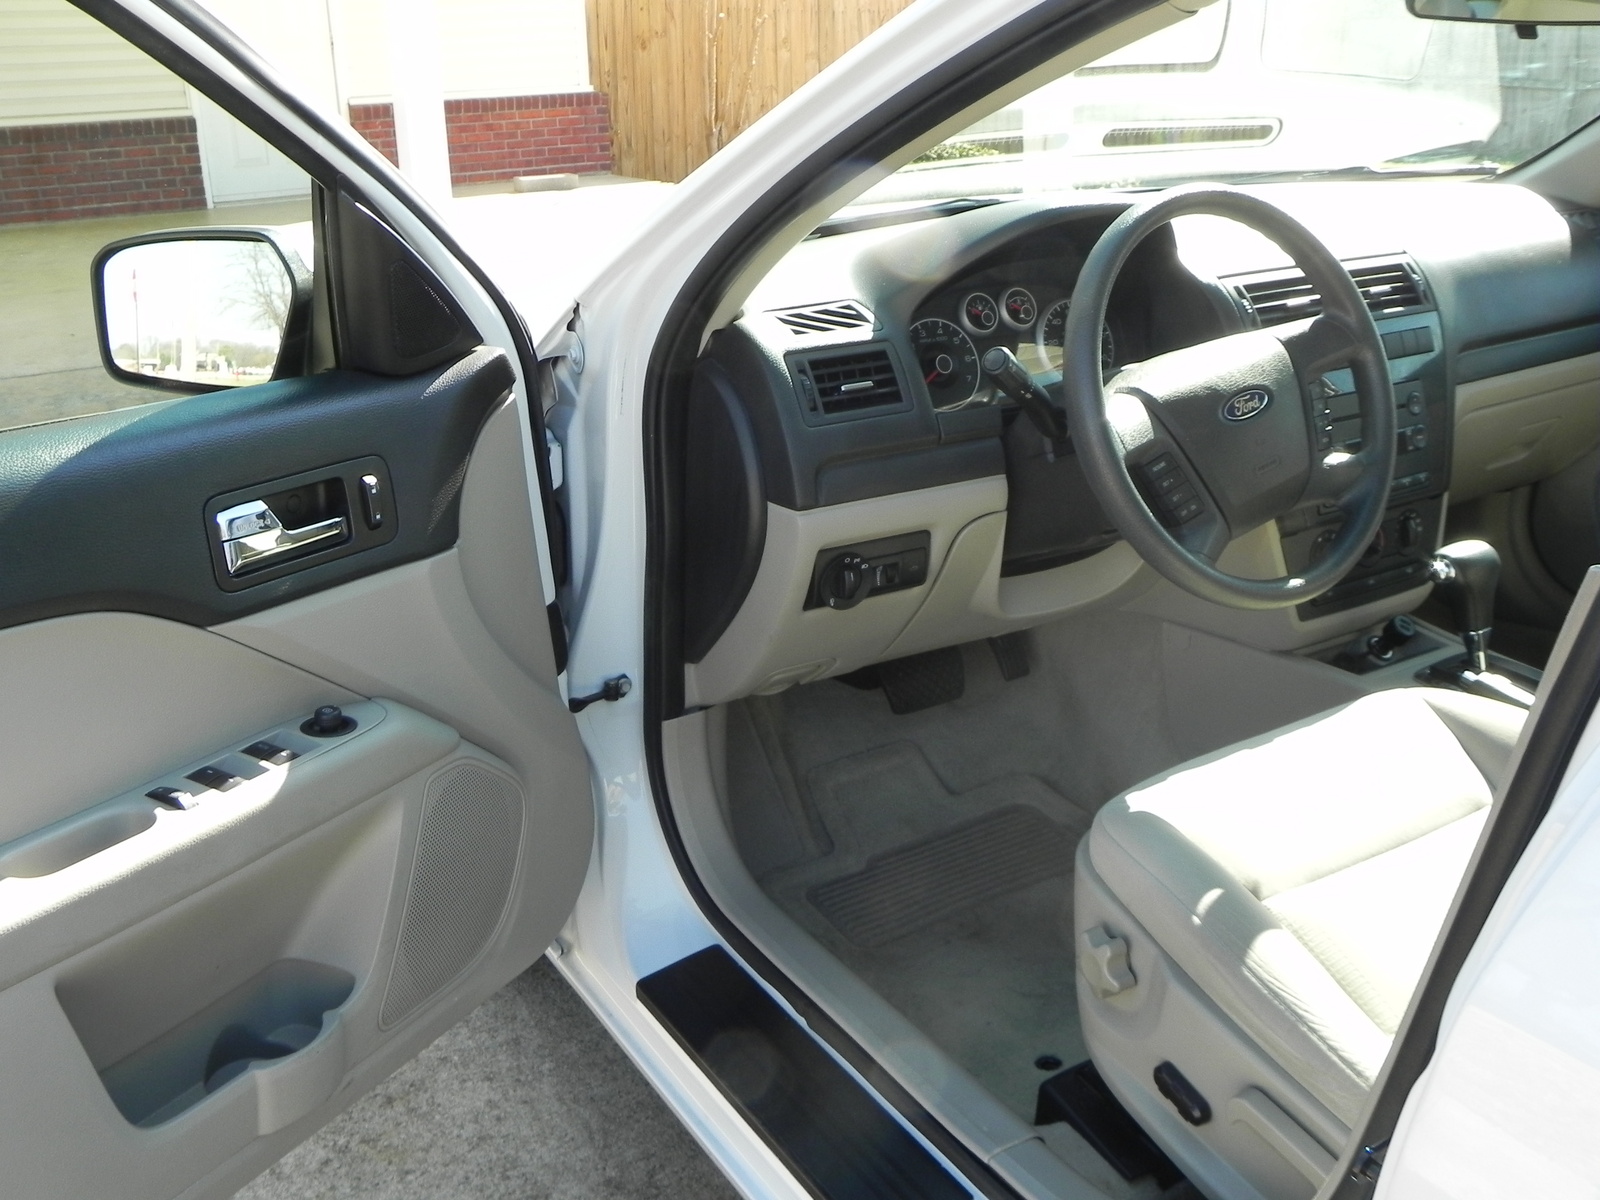 2007 Ford fusion interior mods #3